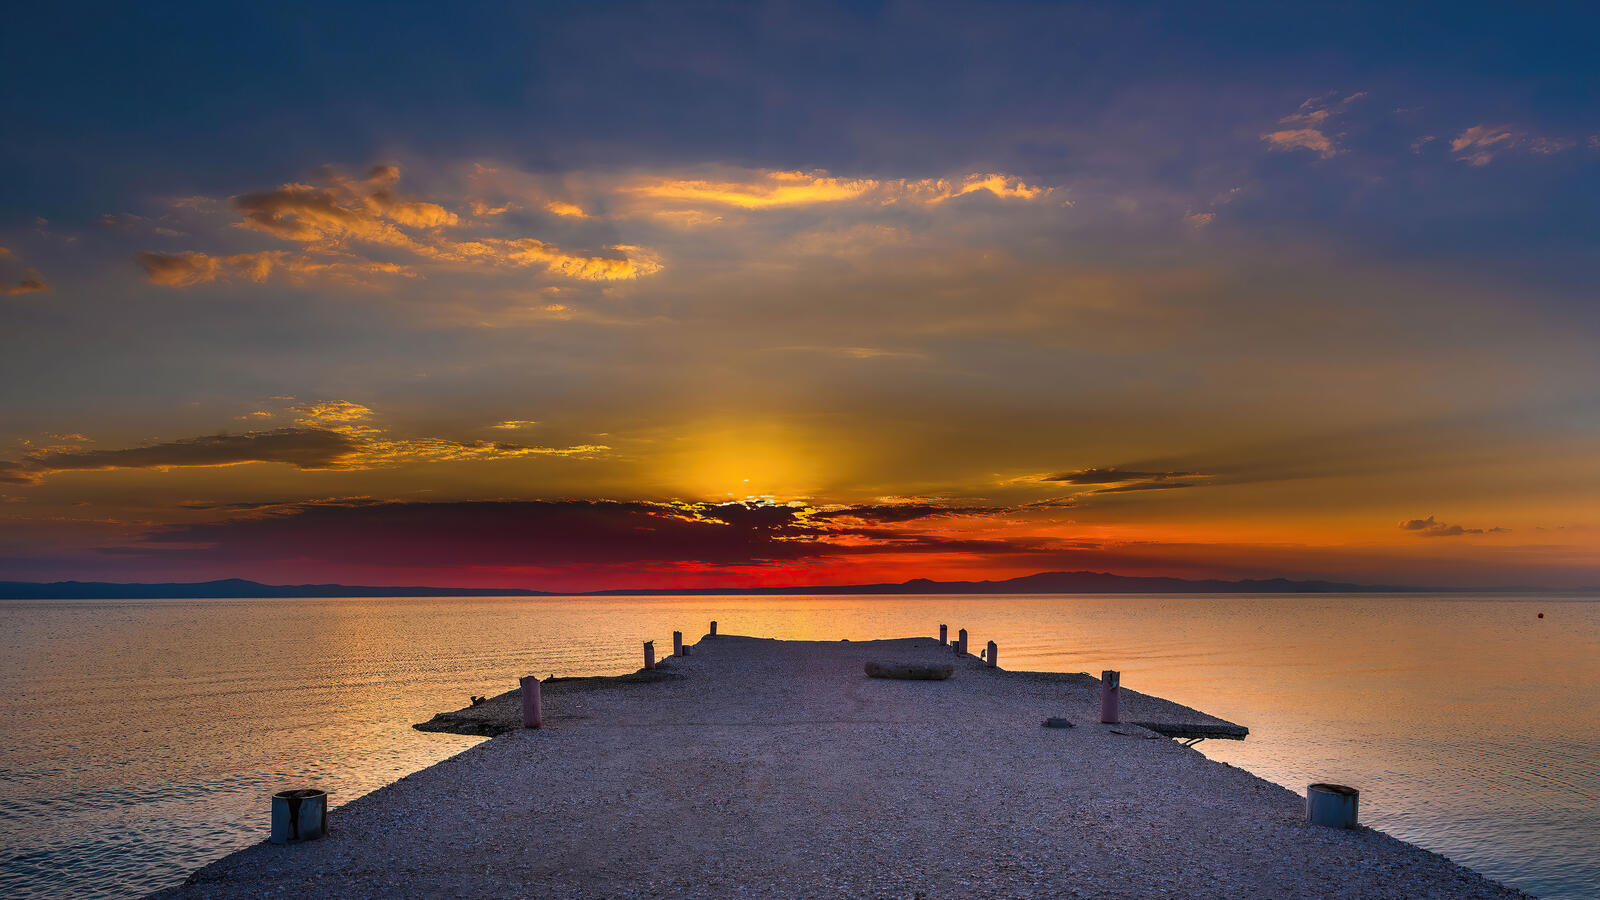 Бесплатное фото Морской пирс на закате